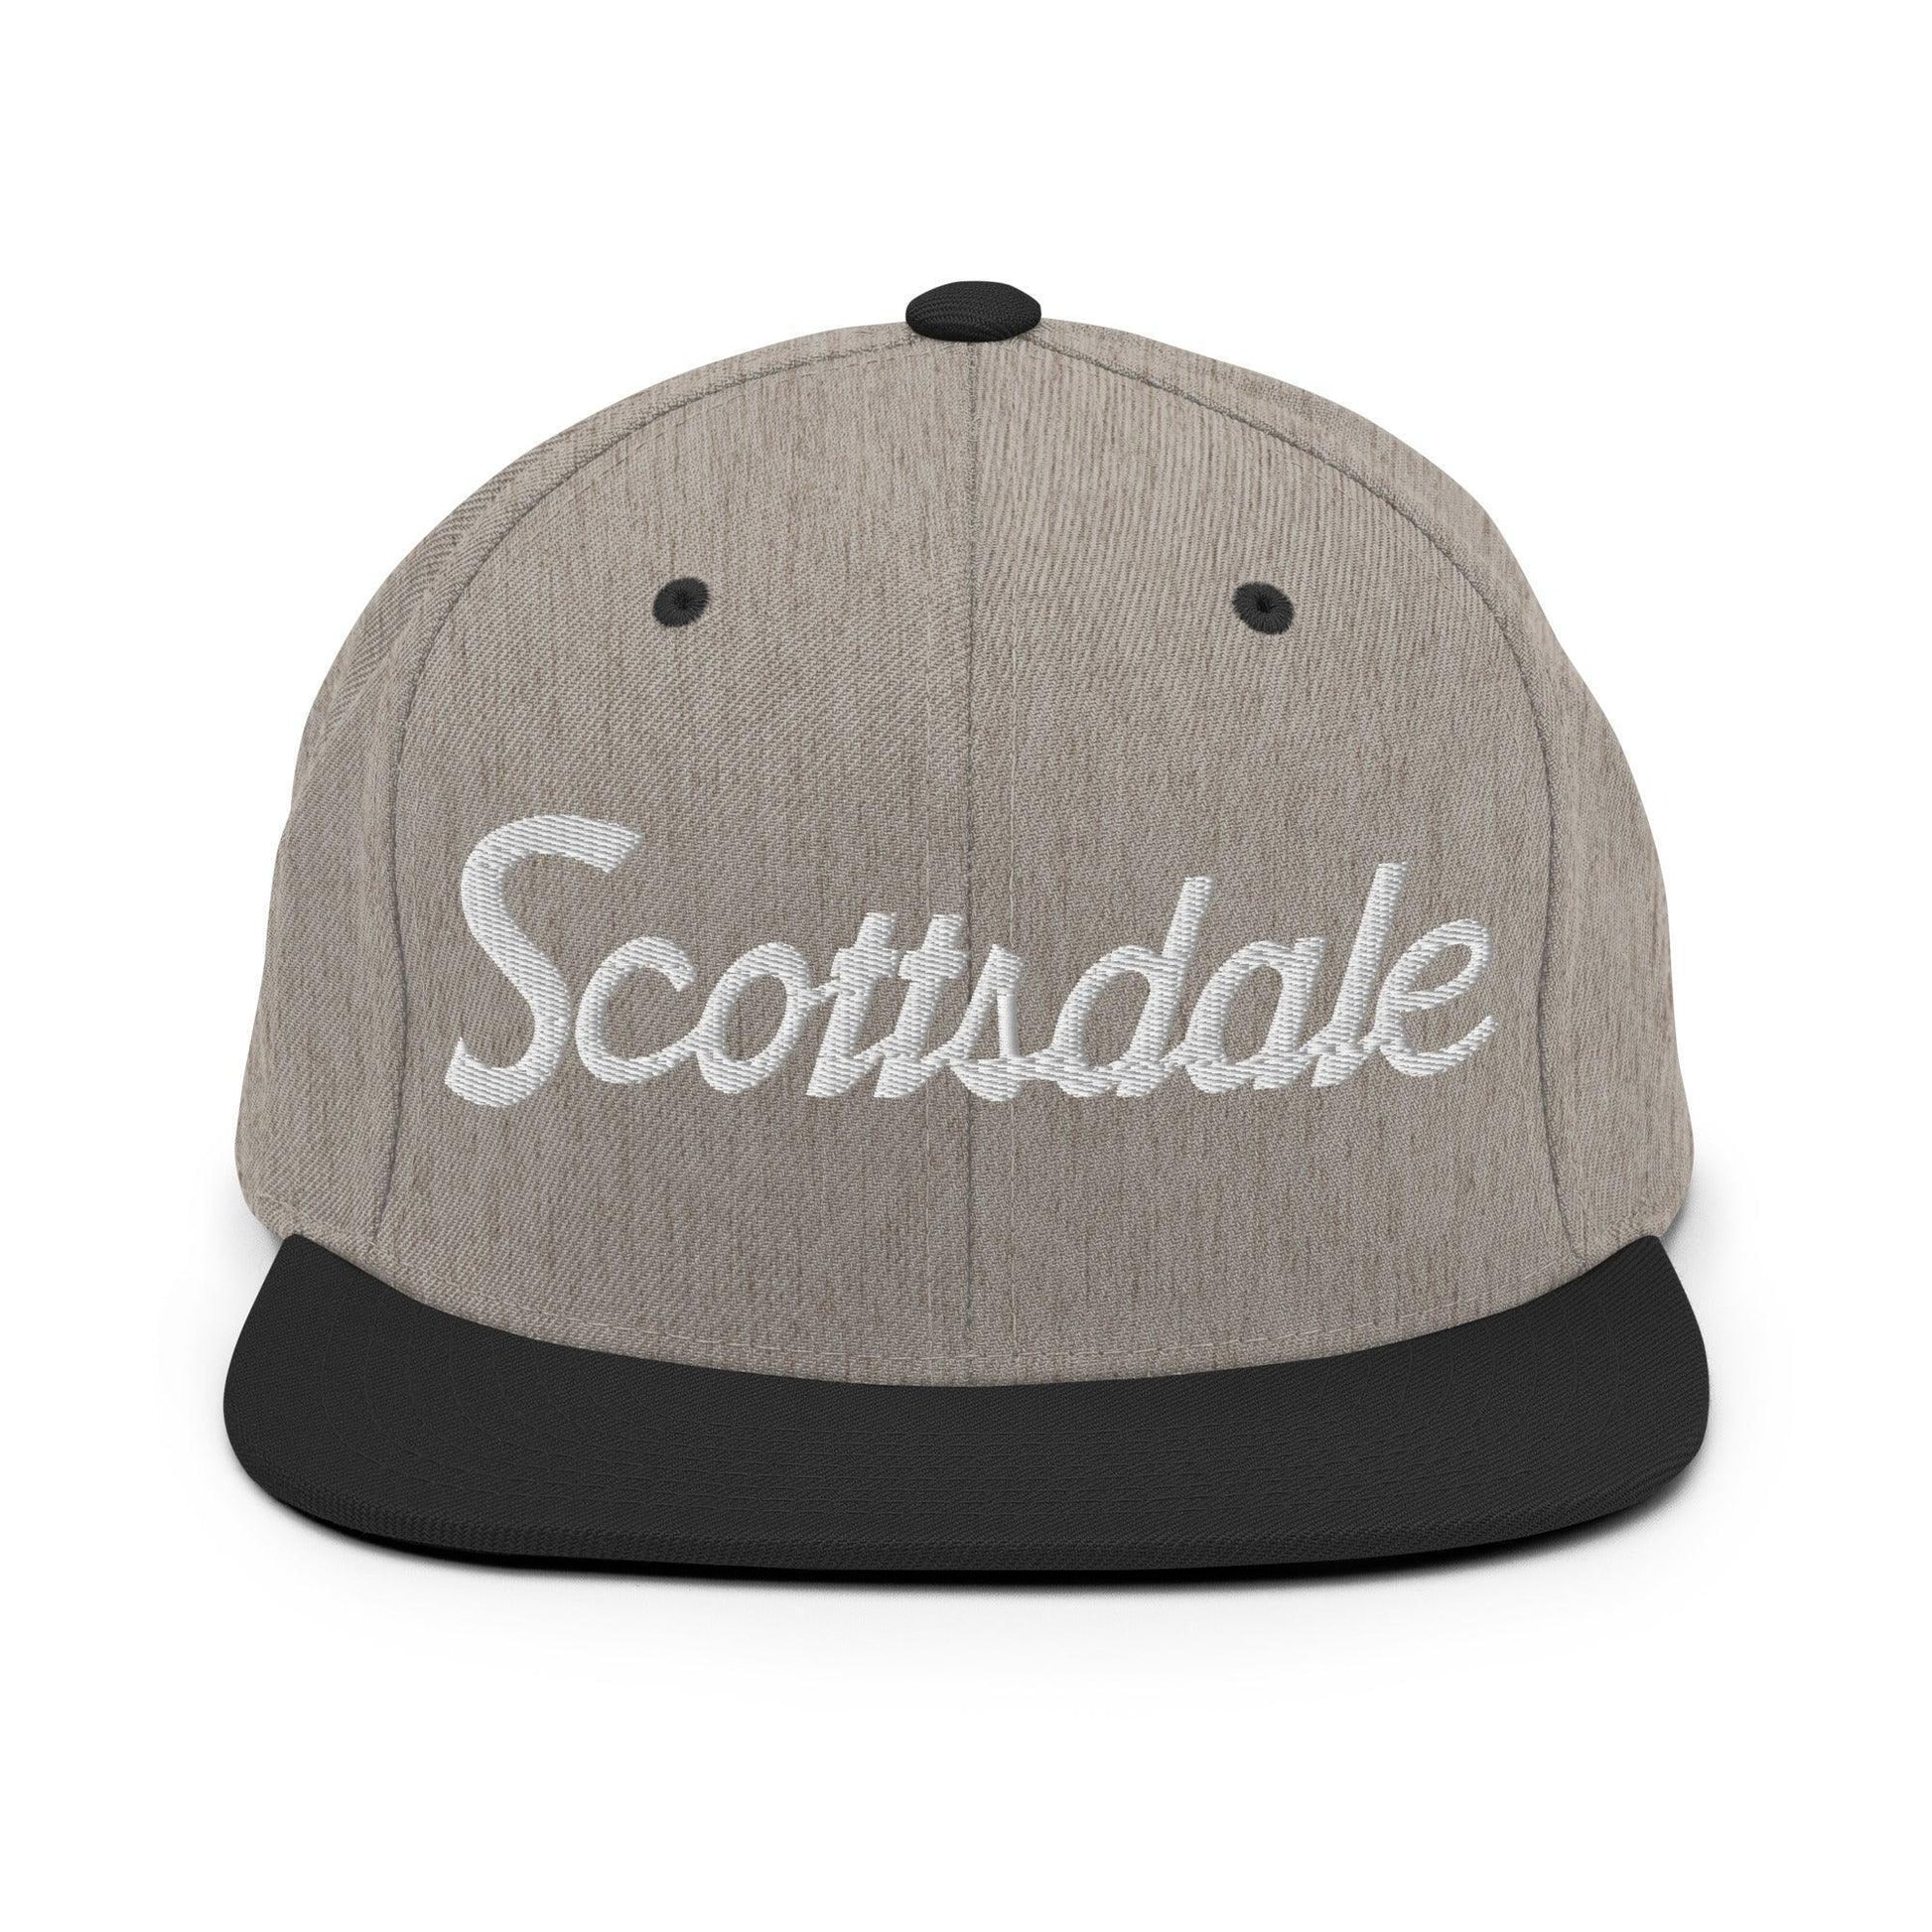 Scottsdale Script Snapback Hat Heather/Black